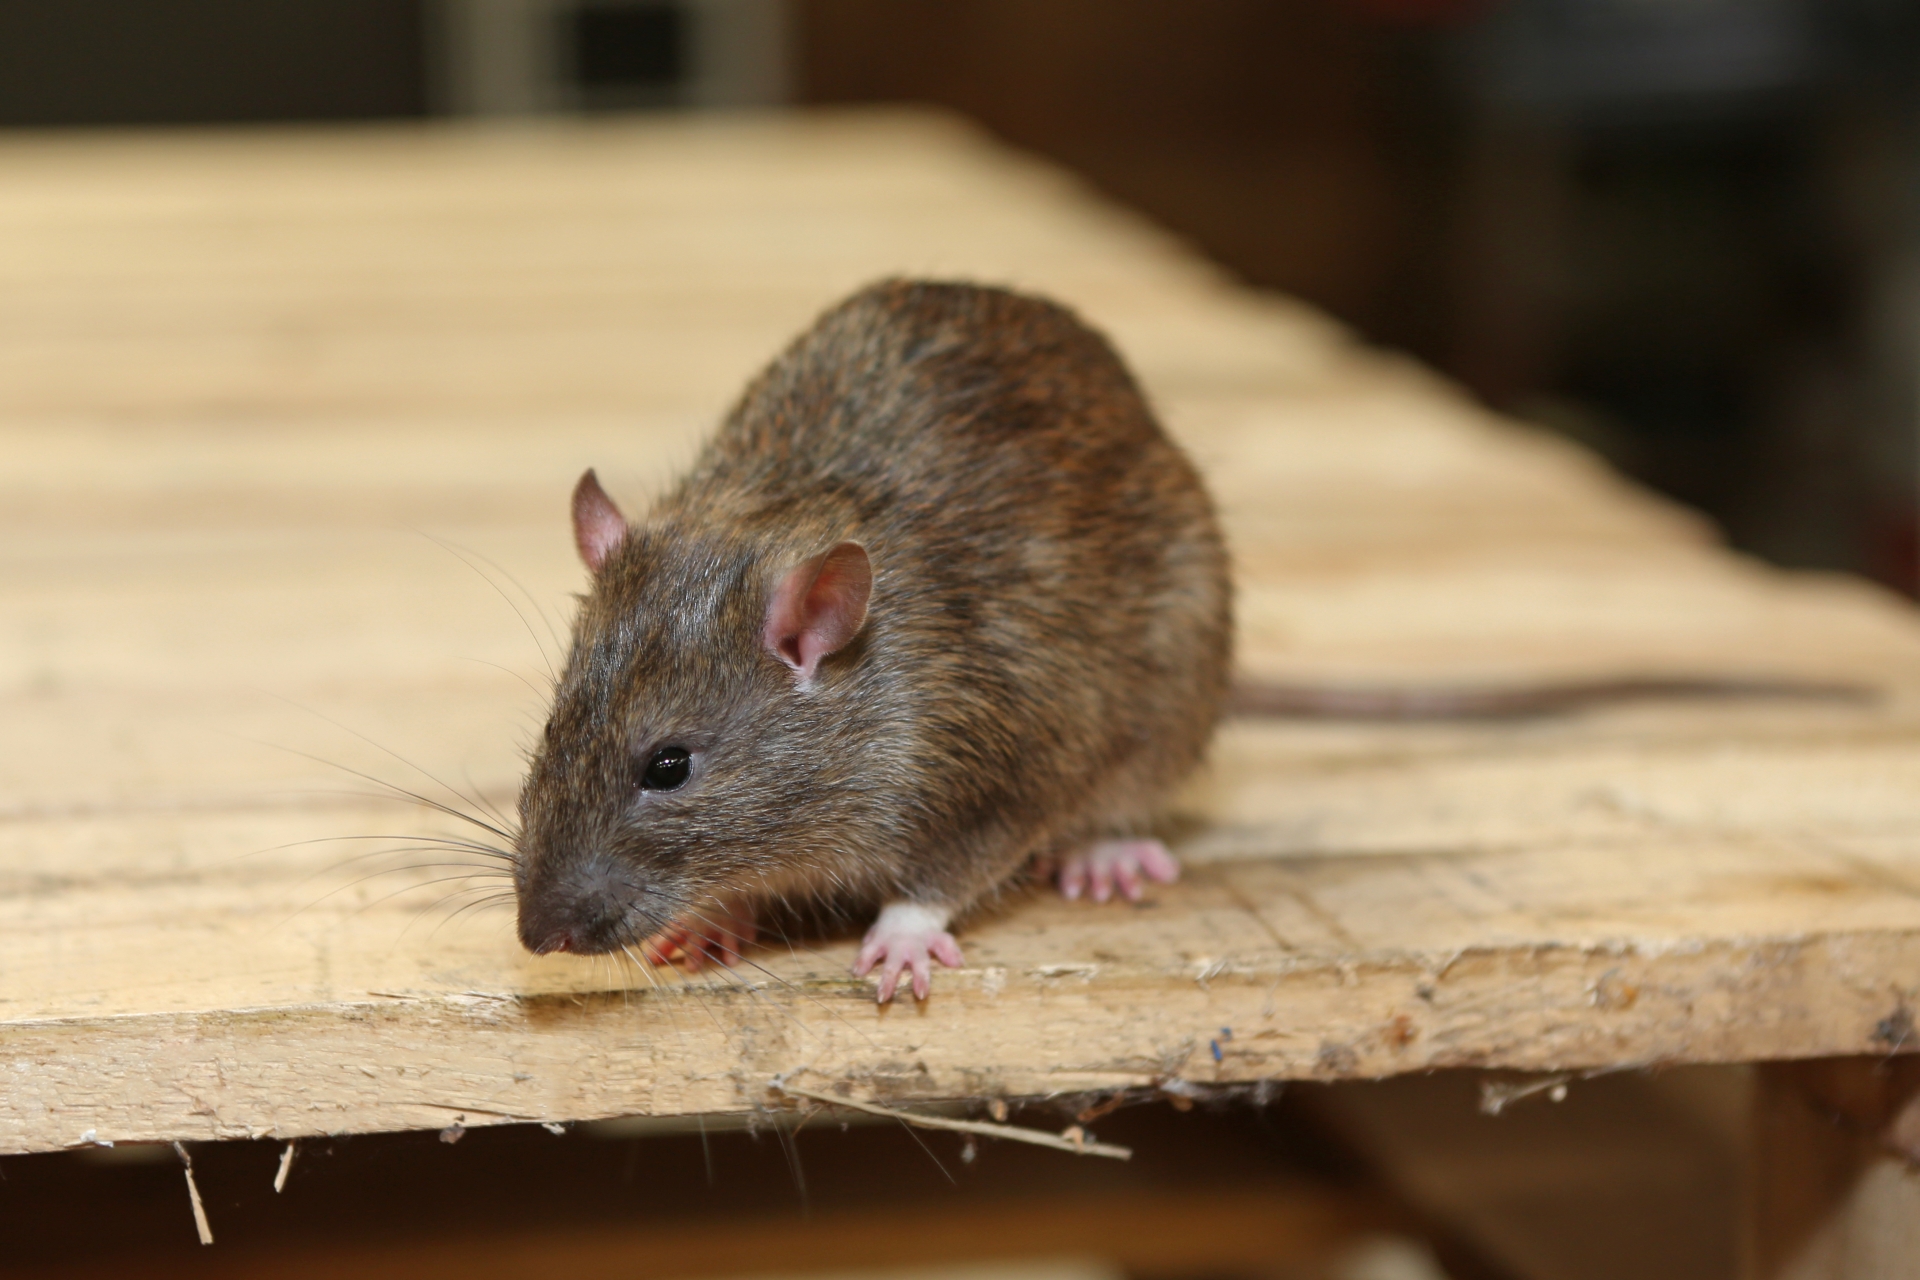 Rat extermination, Pest Control in Cobham, Shorne, DA12. Call Now 020 8166 9746